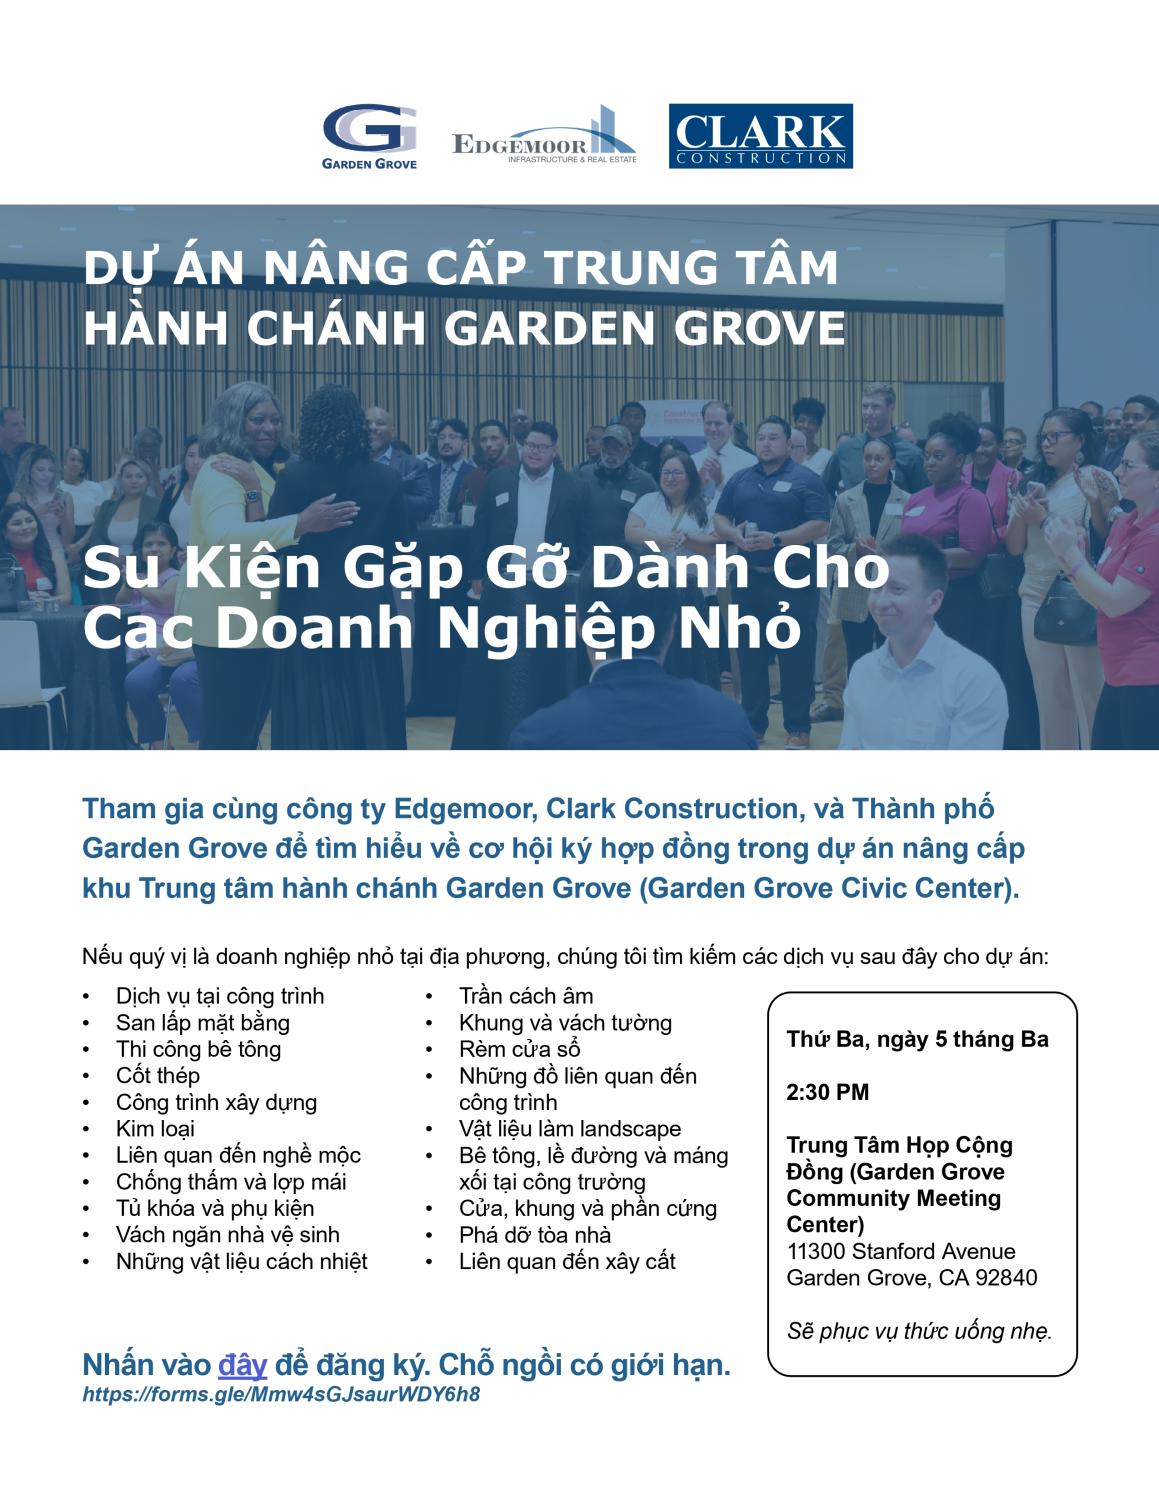 Small Business Outreach Event - Garden Grove Civic Center ...